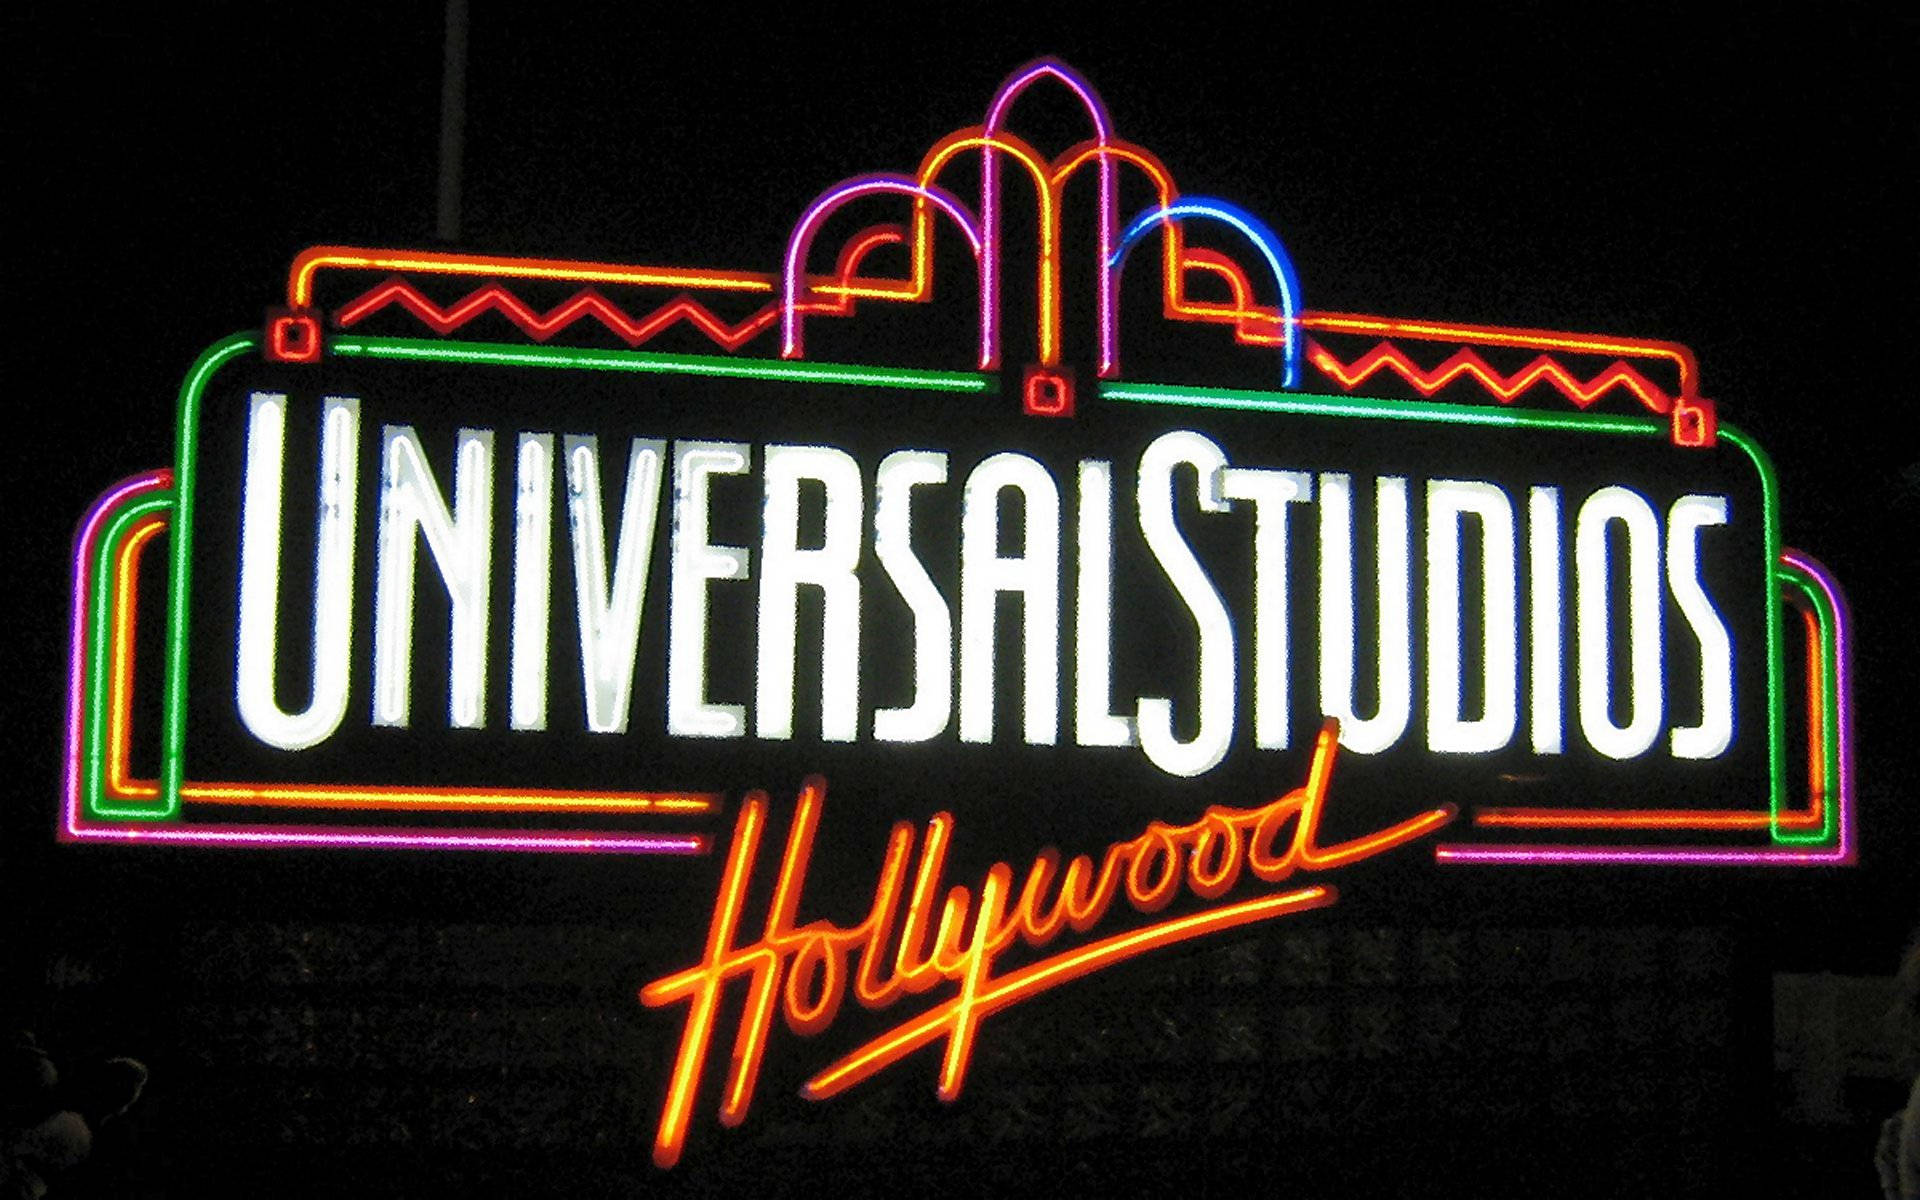 Universellesstudios Hollywood Logo Wallpaper